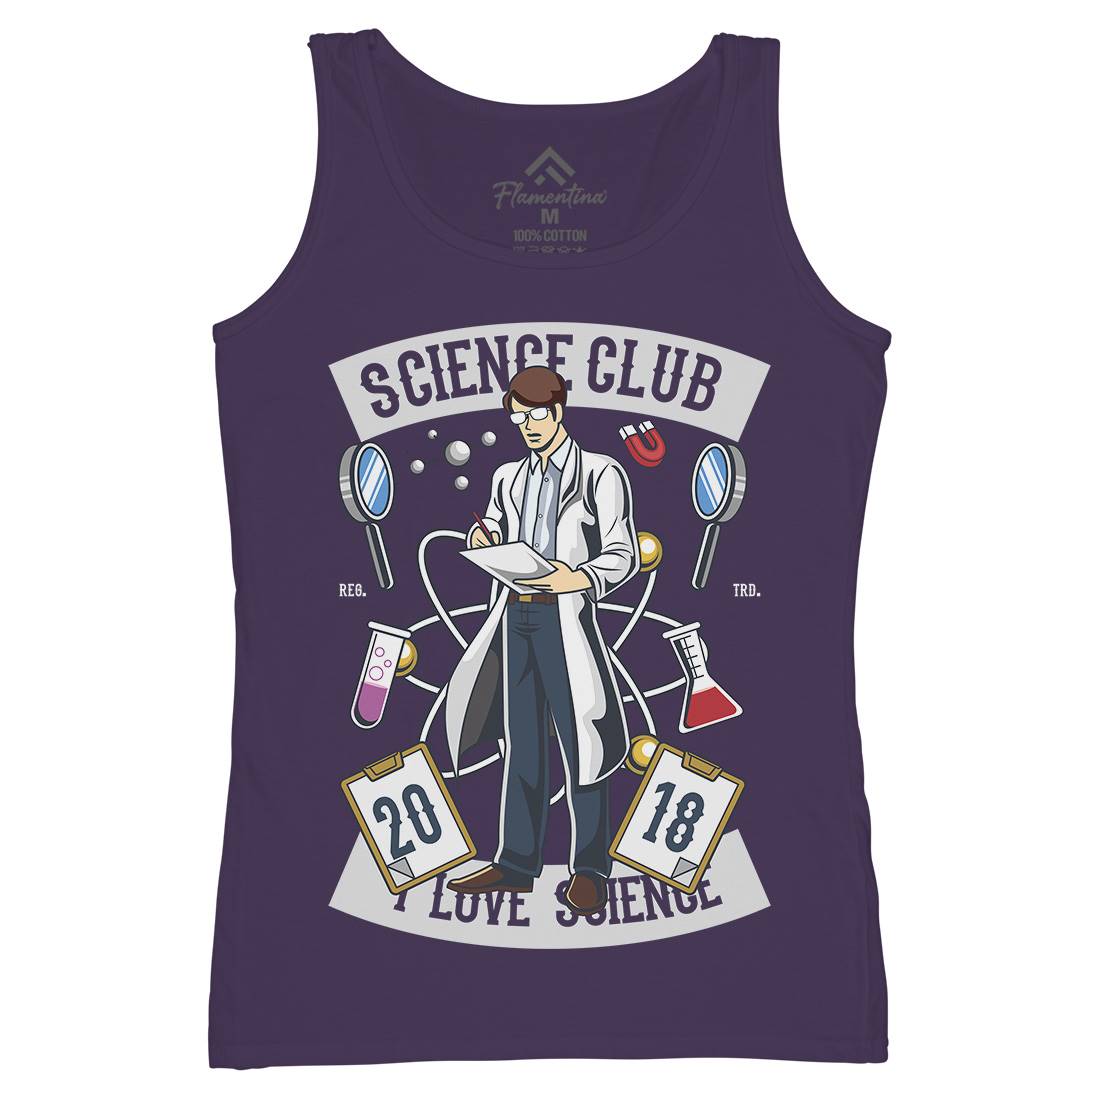 Club I Love Womens Organic Tank Top Vest Science C434